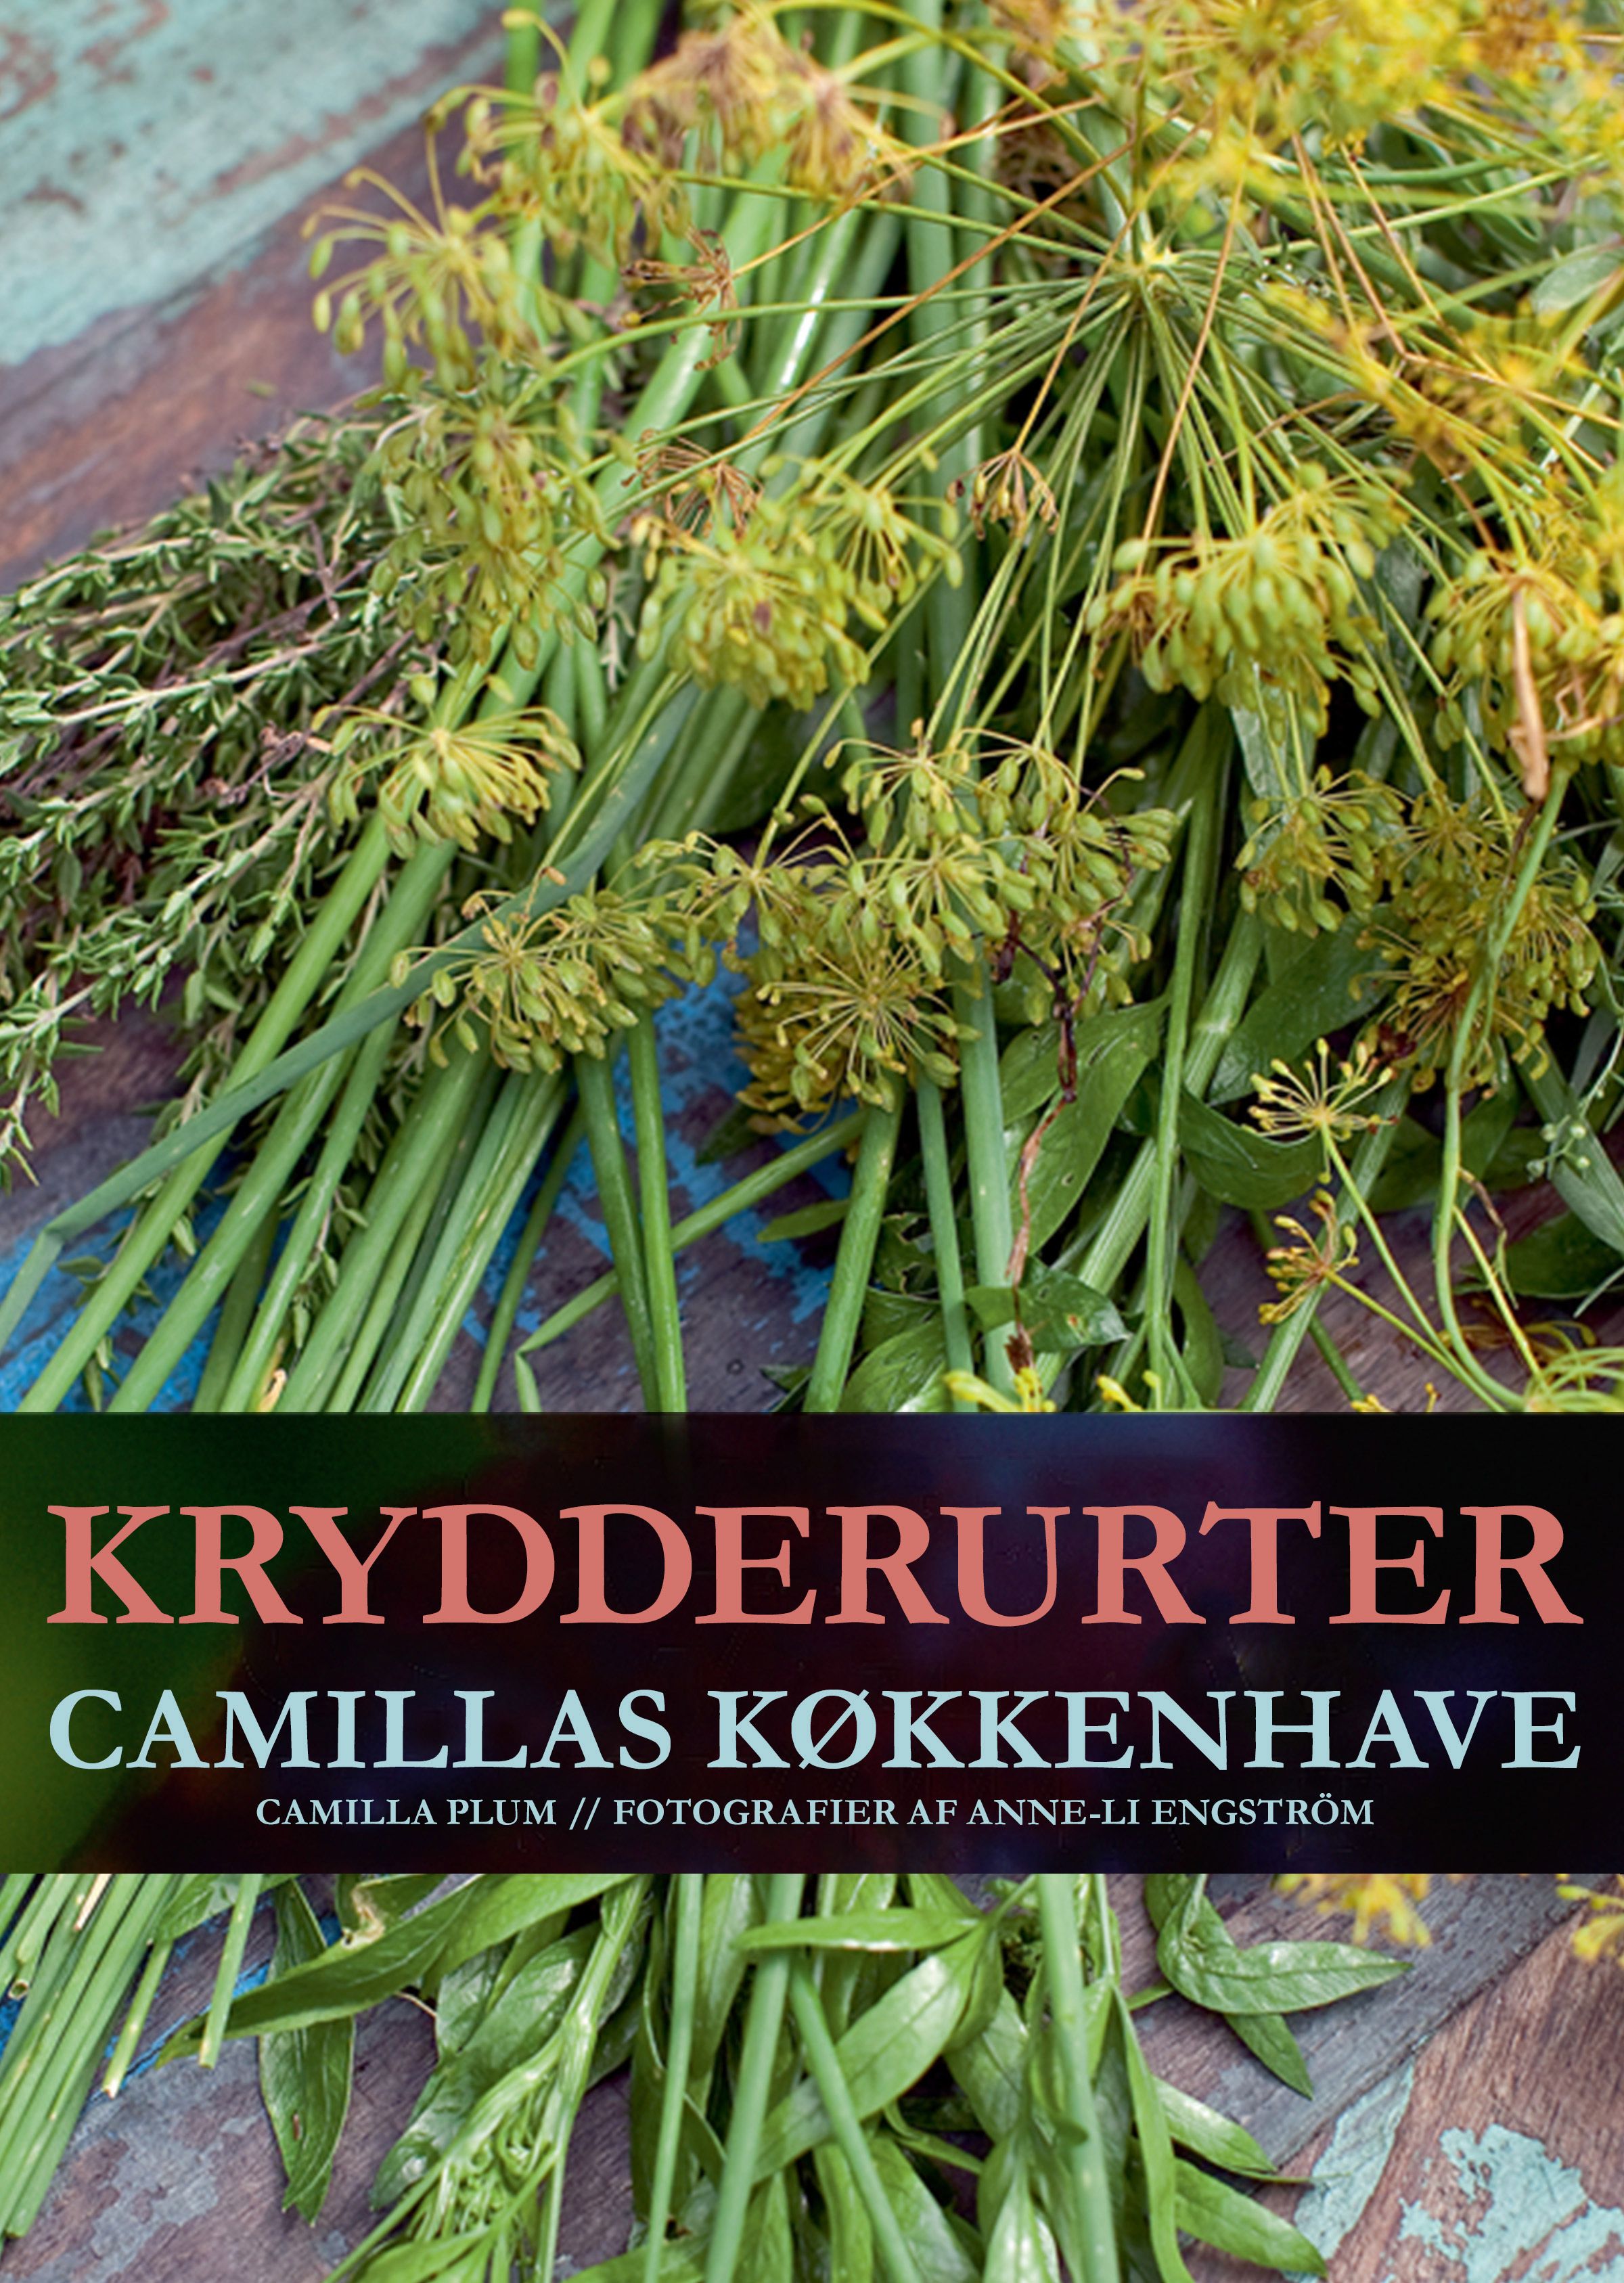 Krydderurter - Camillas køkkenhave, e-bok av Camilla Plum